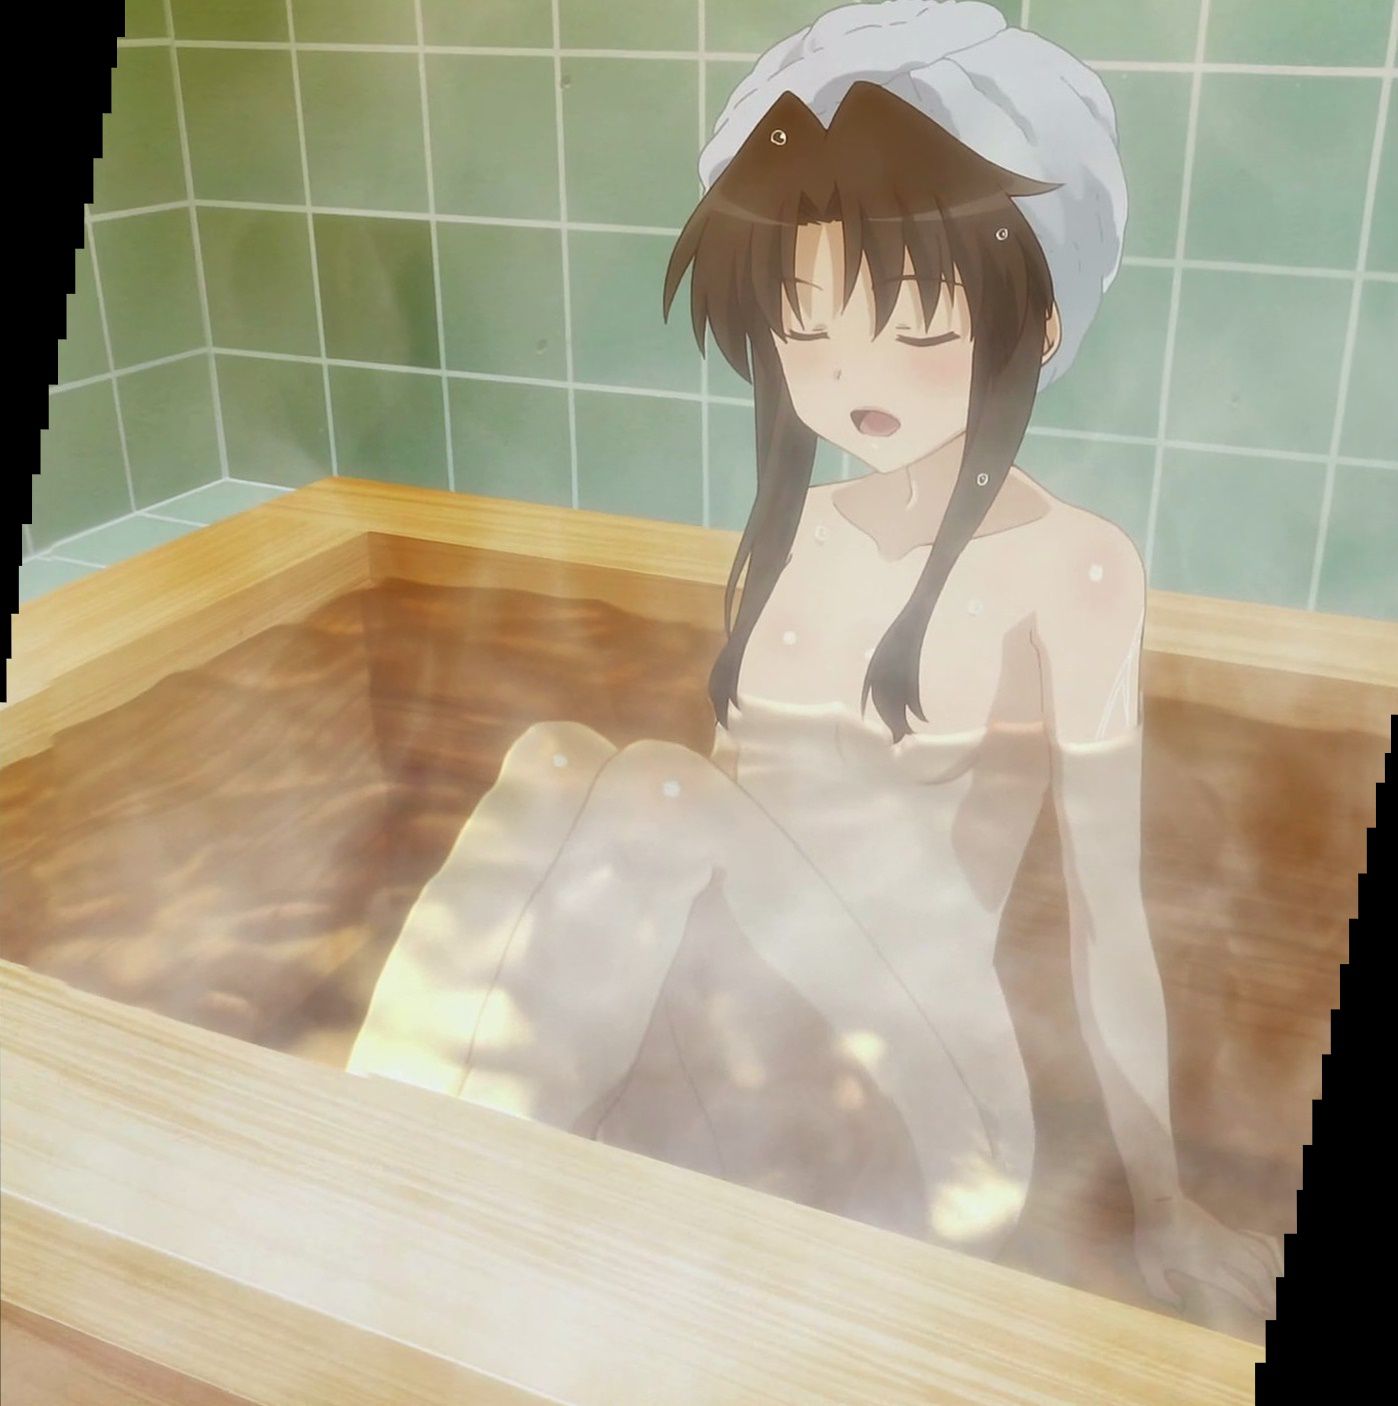 Anime girl's recent fine erotic picture collection wwwwwwwwwwwwwwww 26